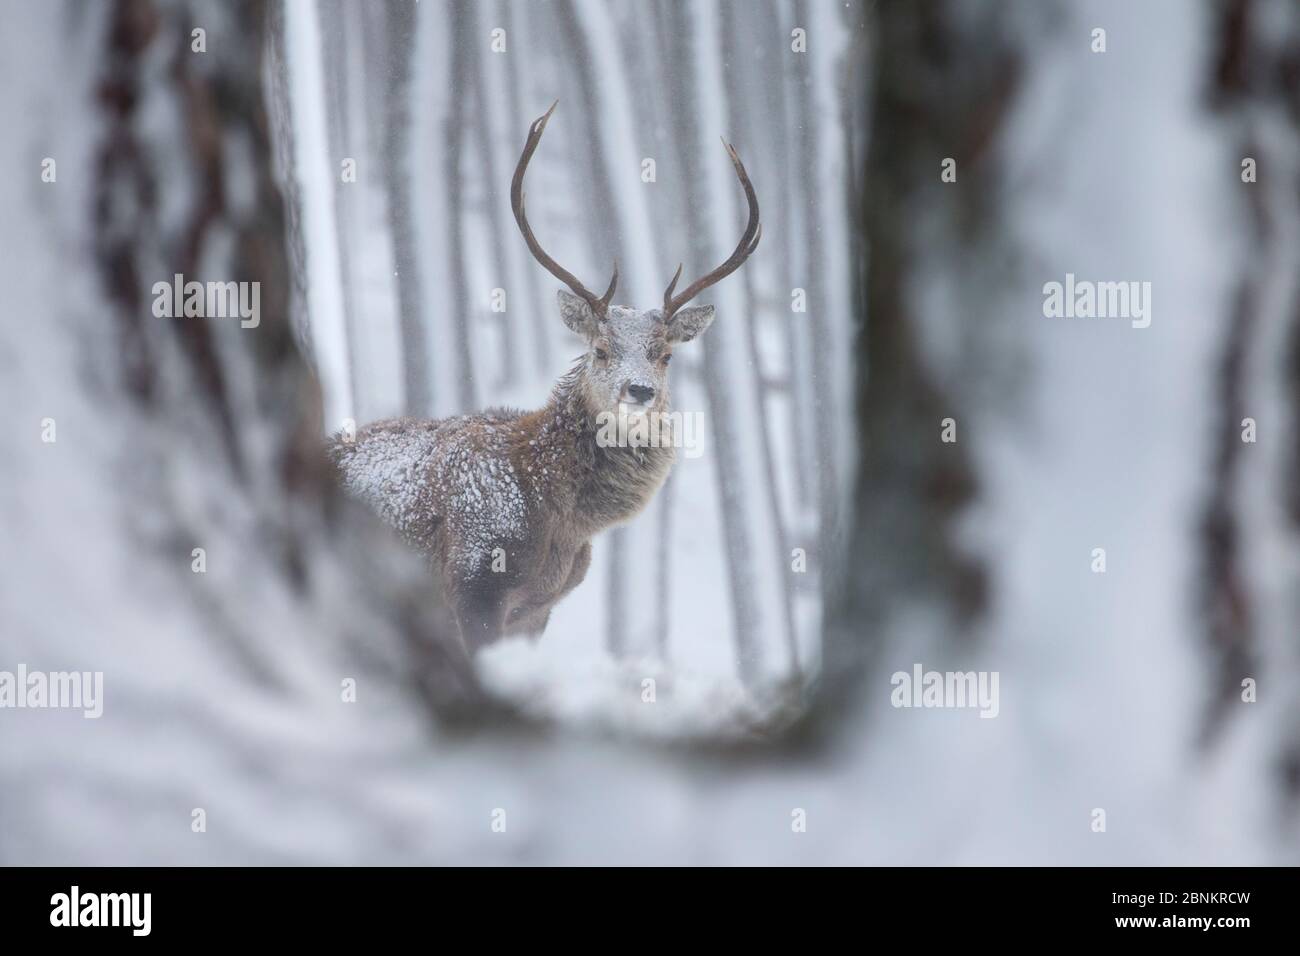 Il cervo (Cervus elaphus) feste di addio al celibato in Blizzard, Alvie station wagon, Cairngorms National Park, Scozia, gennaio. Foto Stock